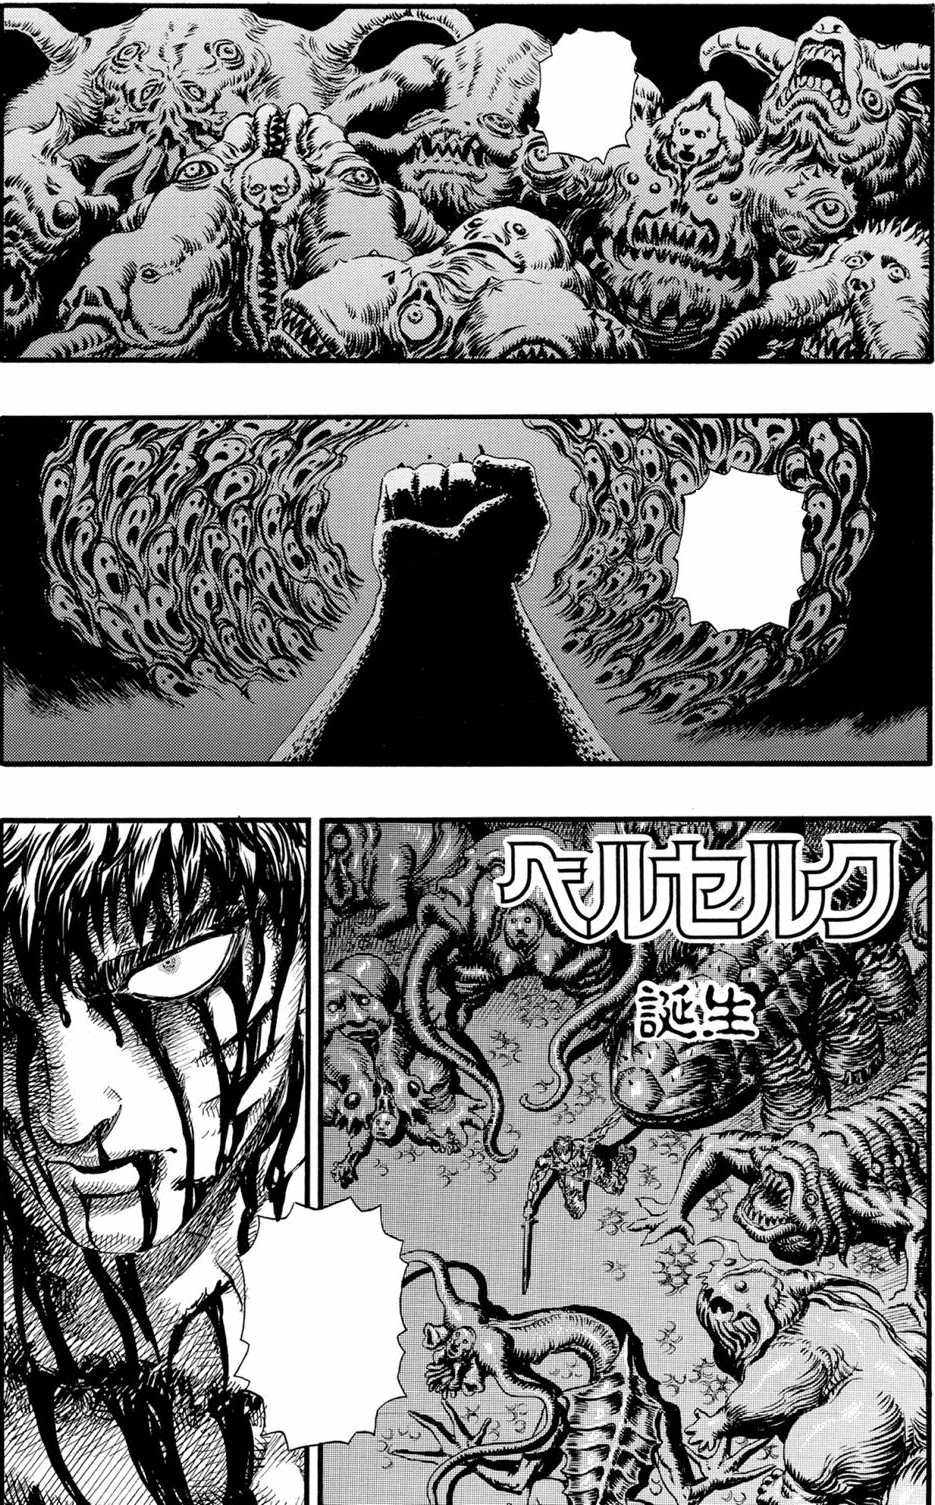 Episode 86 (Manga) | Berserk Wiki | Fandom powered by Wikia